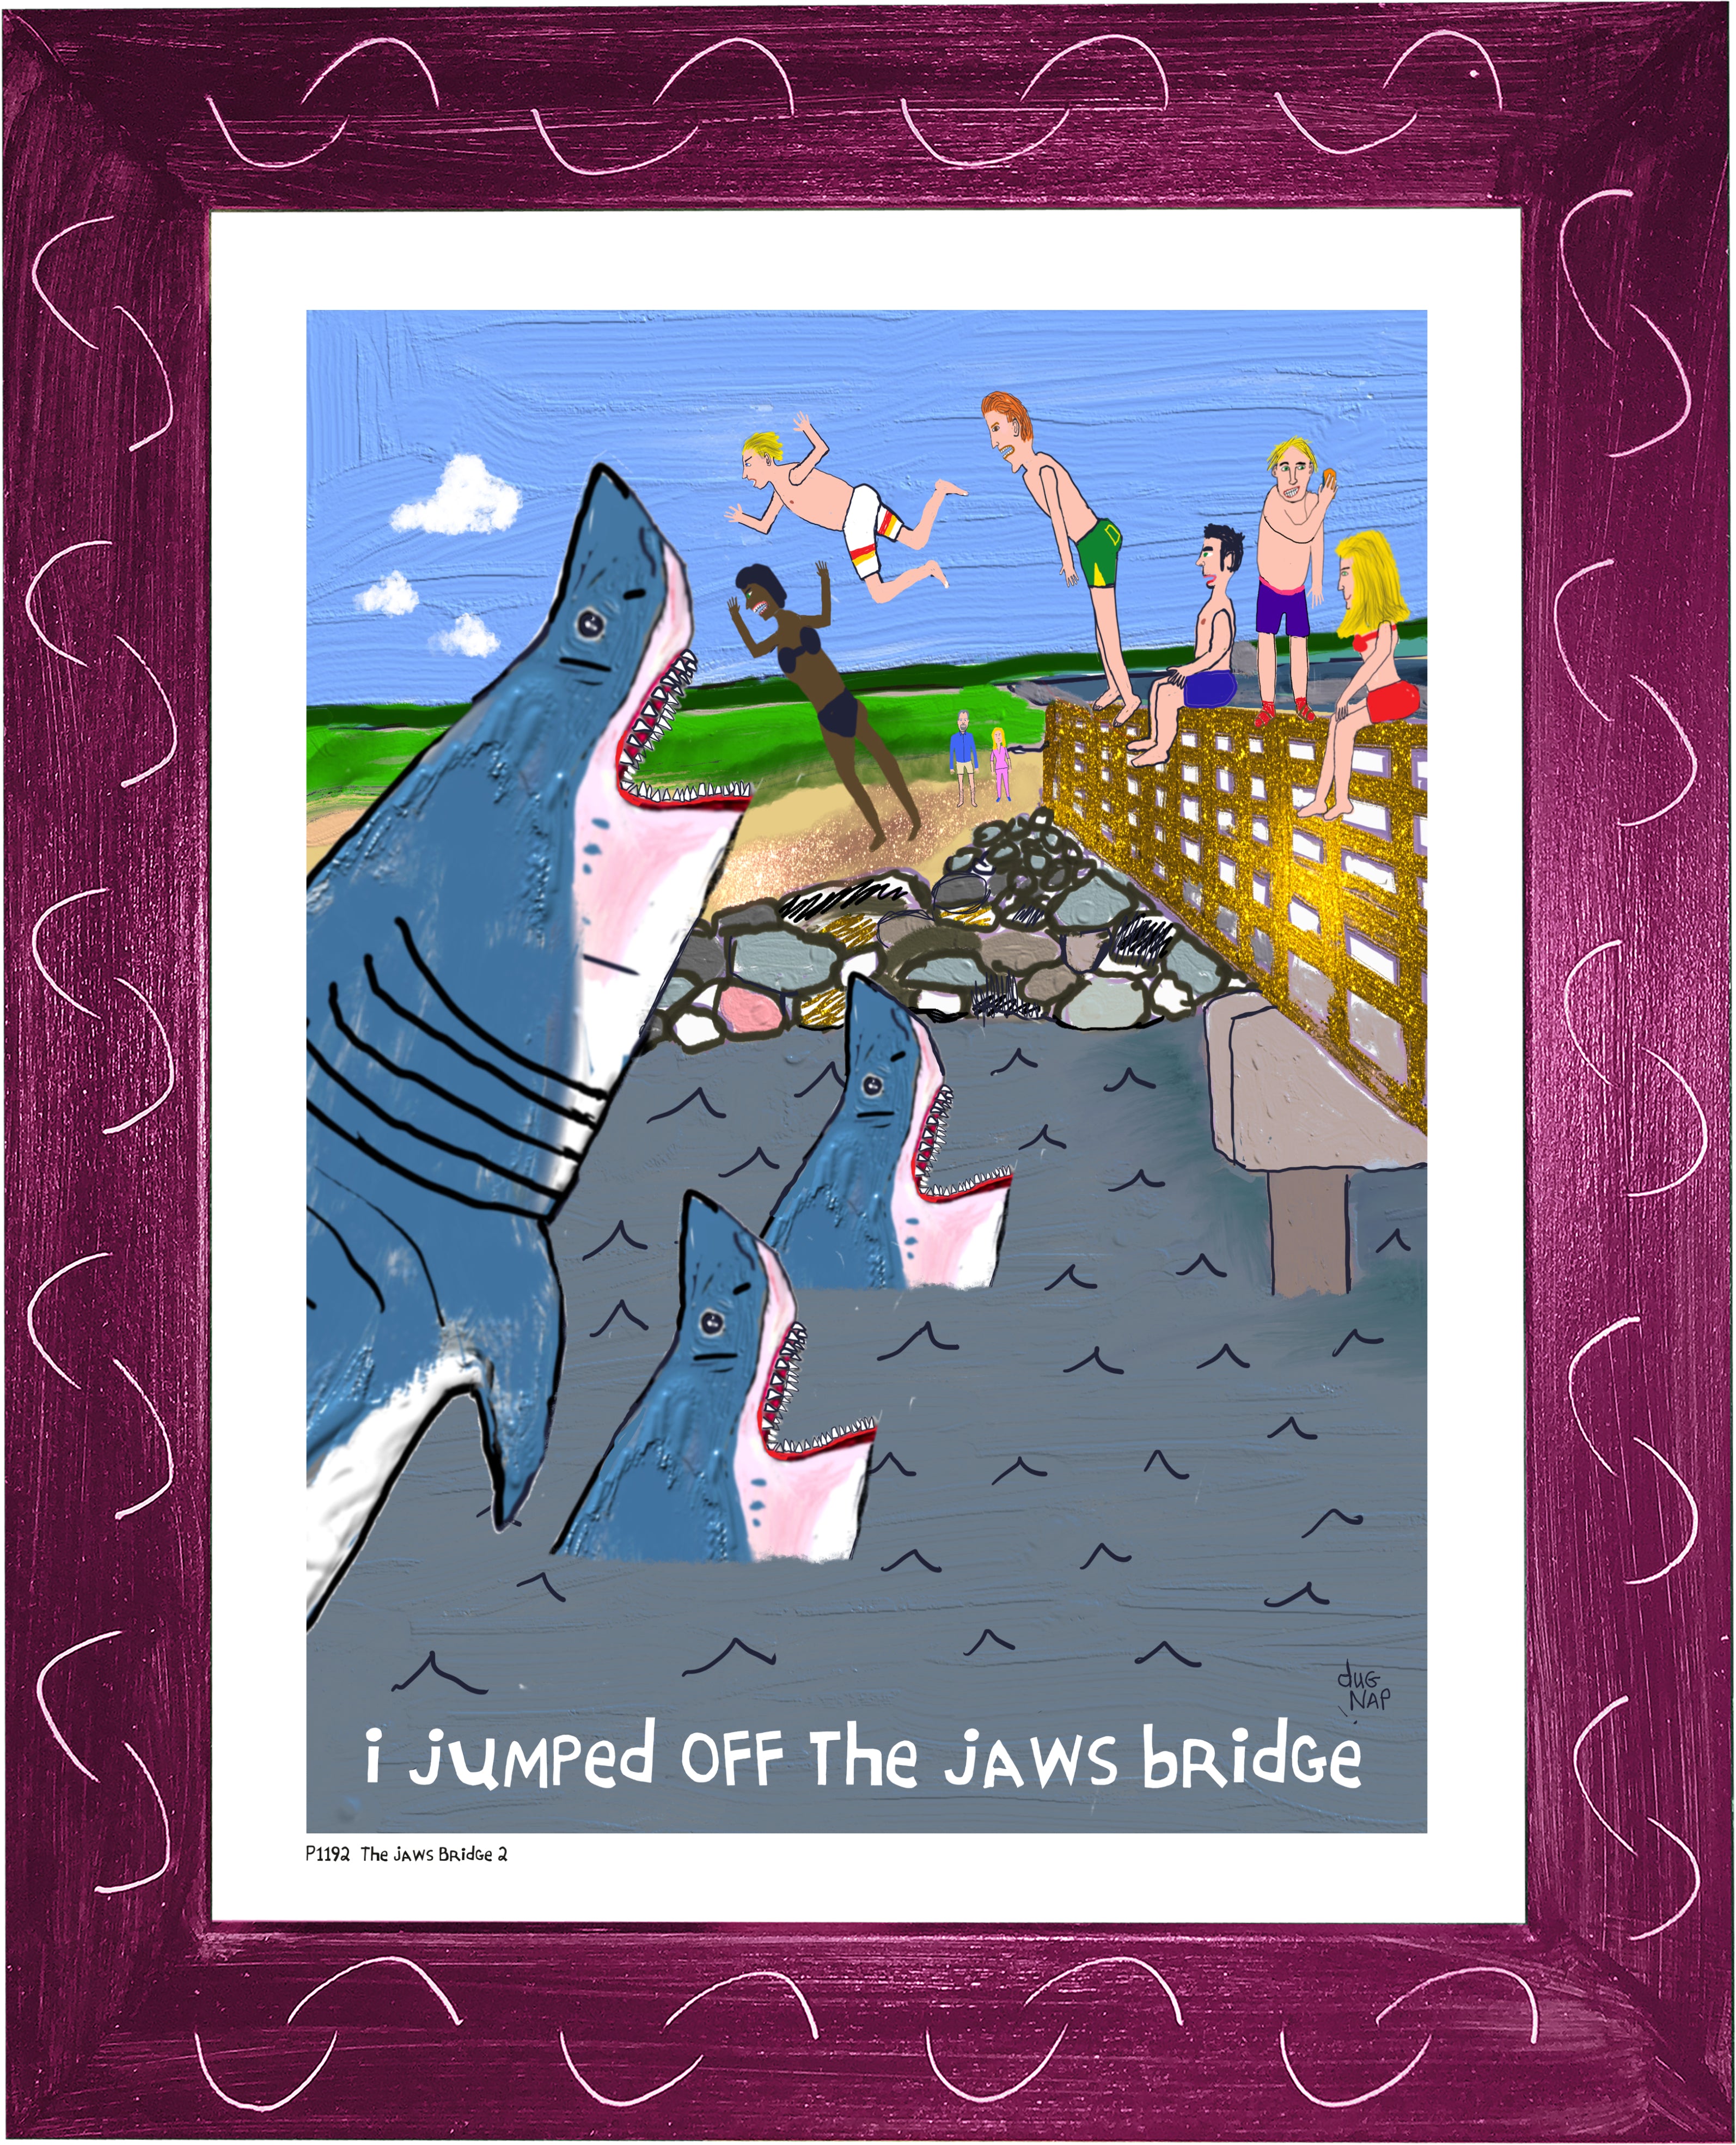 P1192 - The Jaws Bridge 2